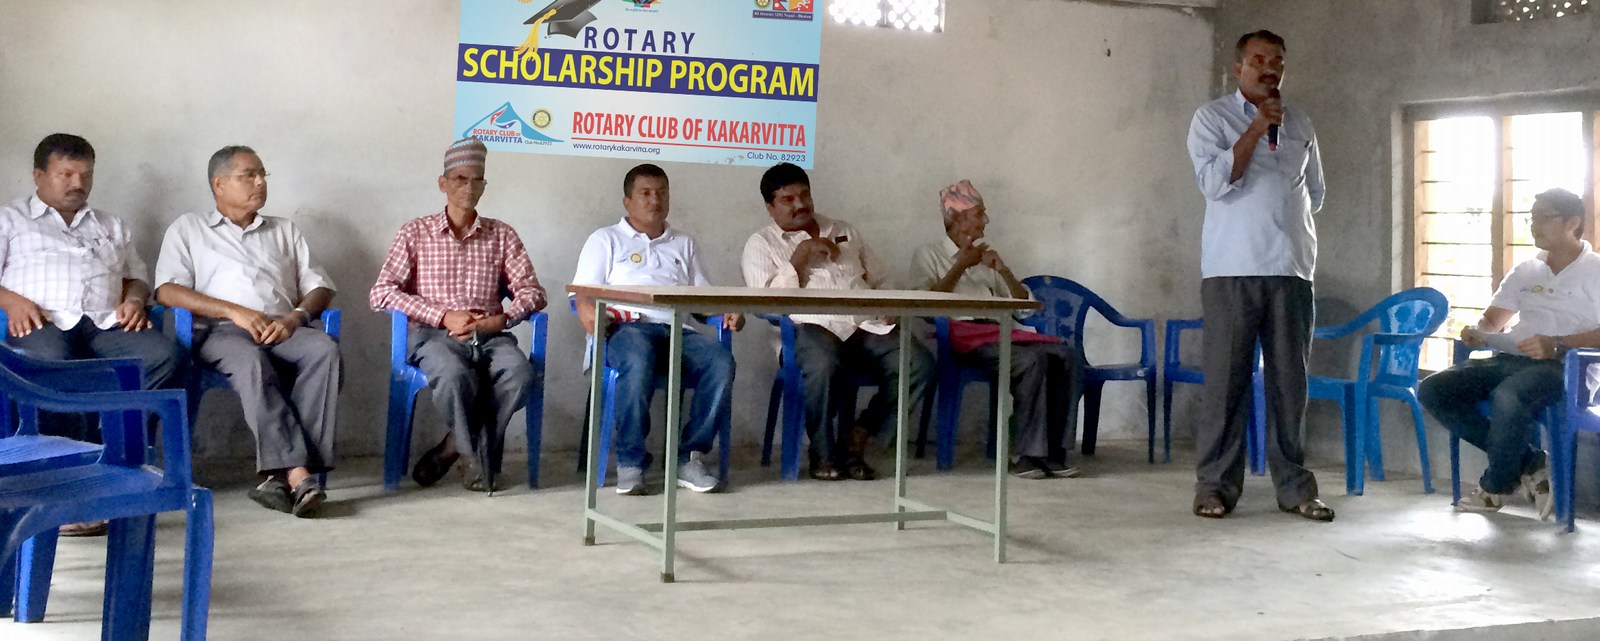 5 scholarship distribution rotary club of kakarvitta 2